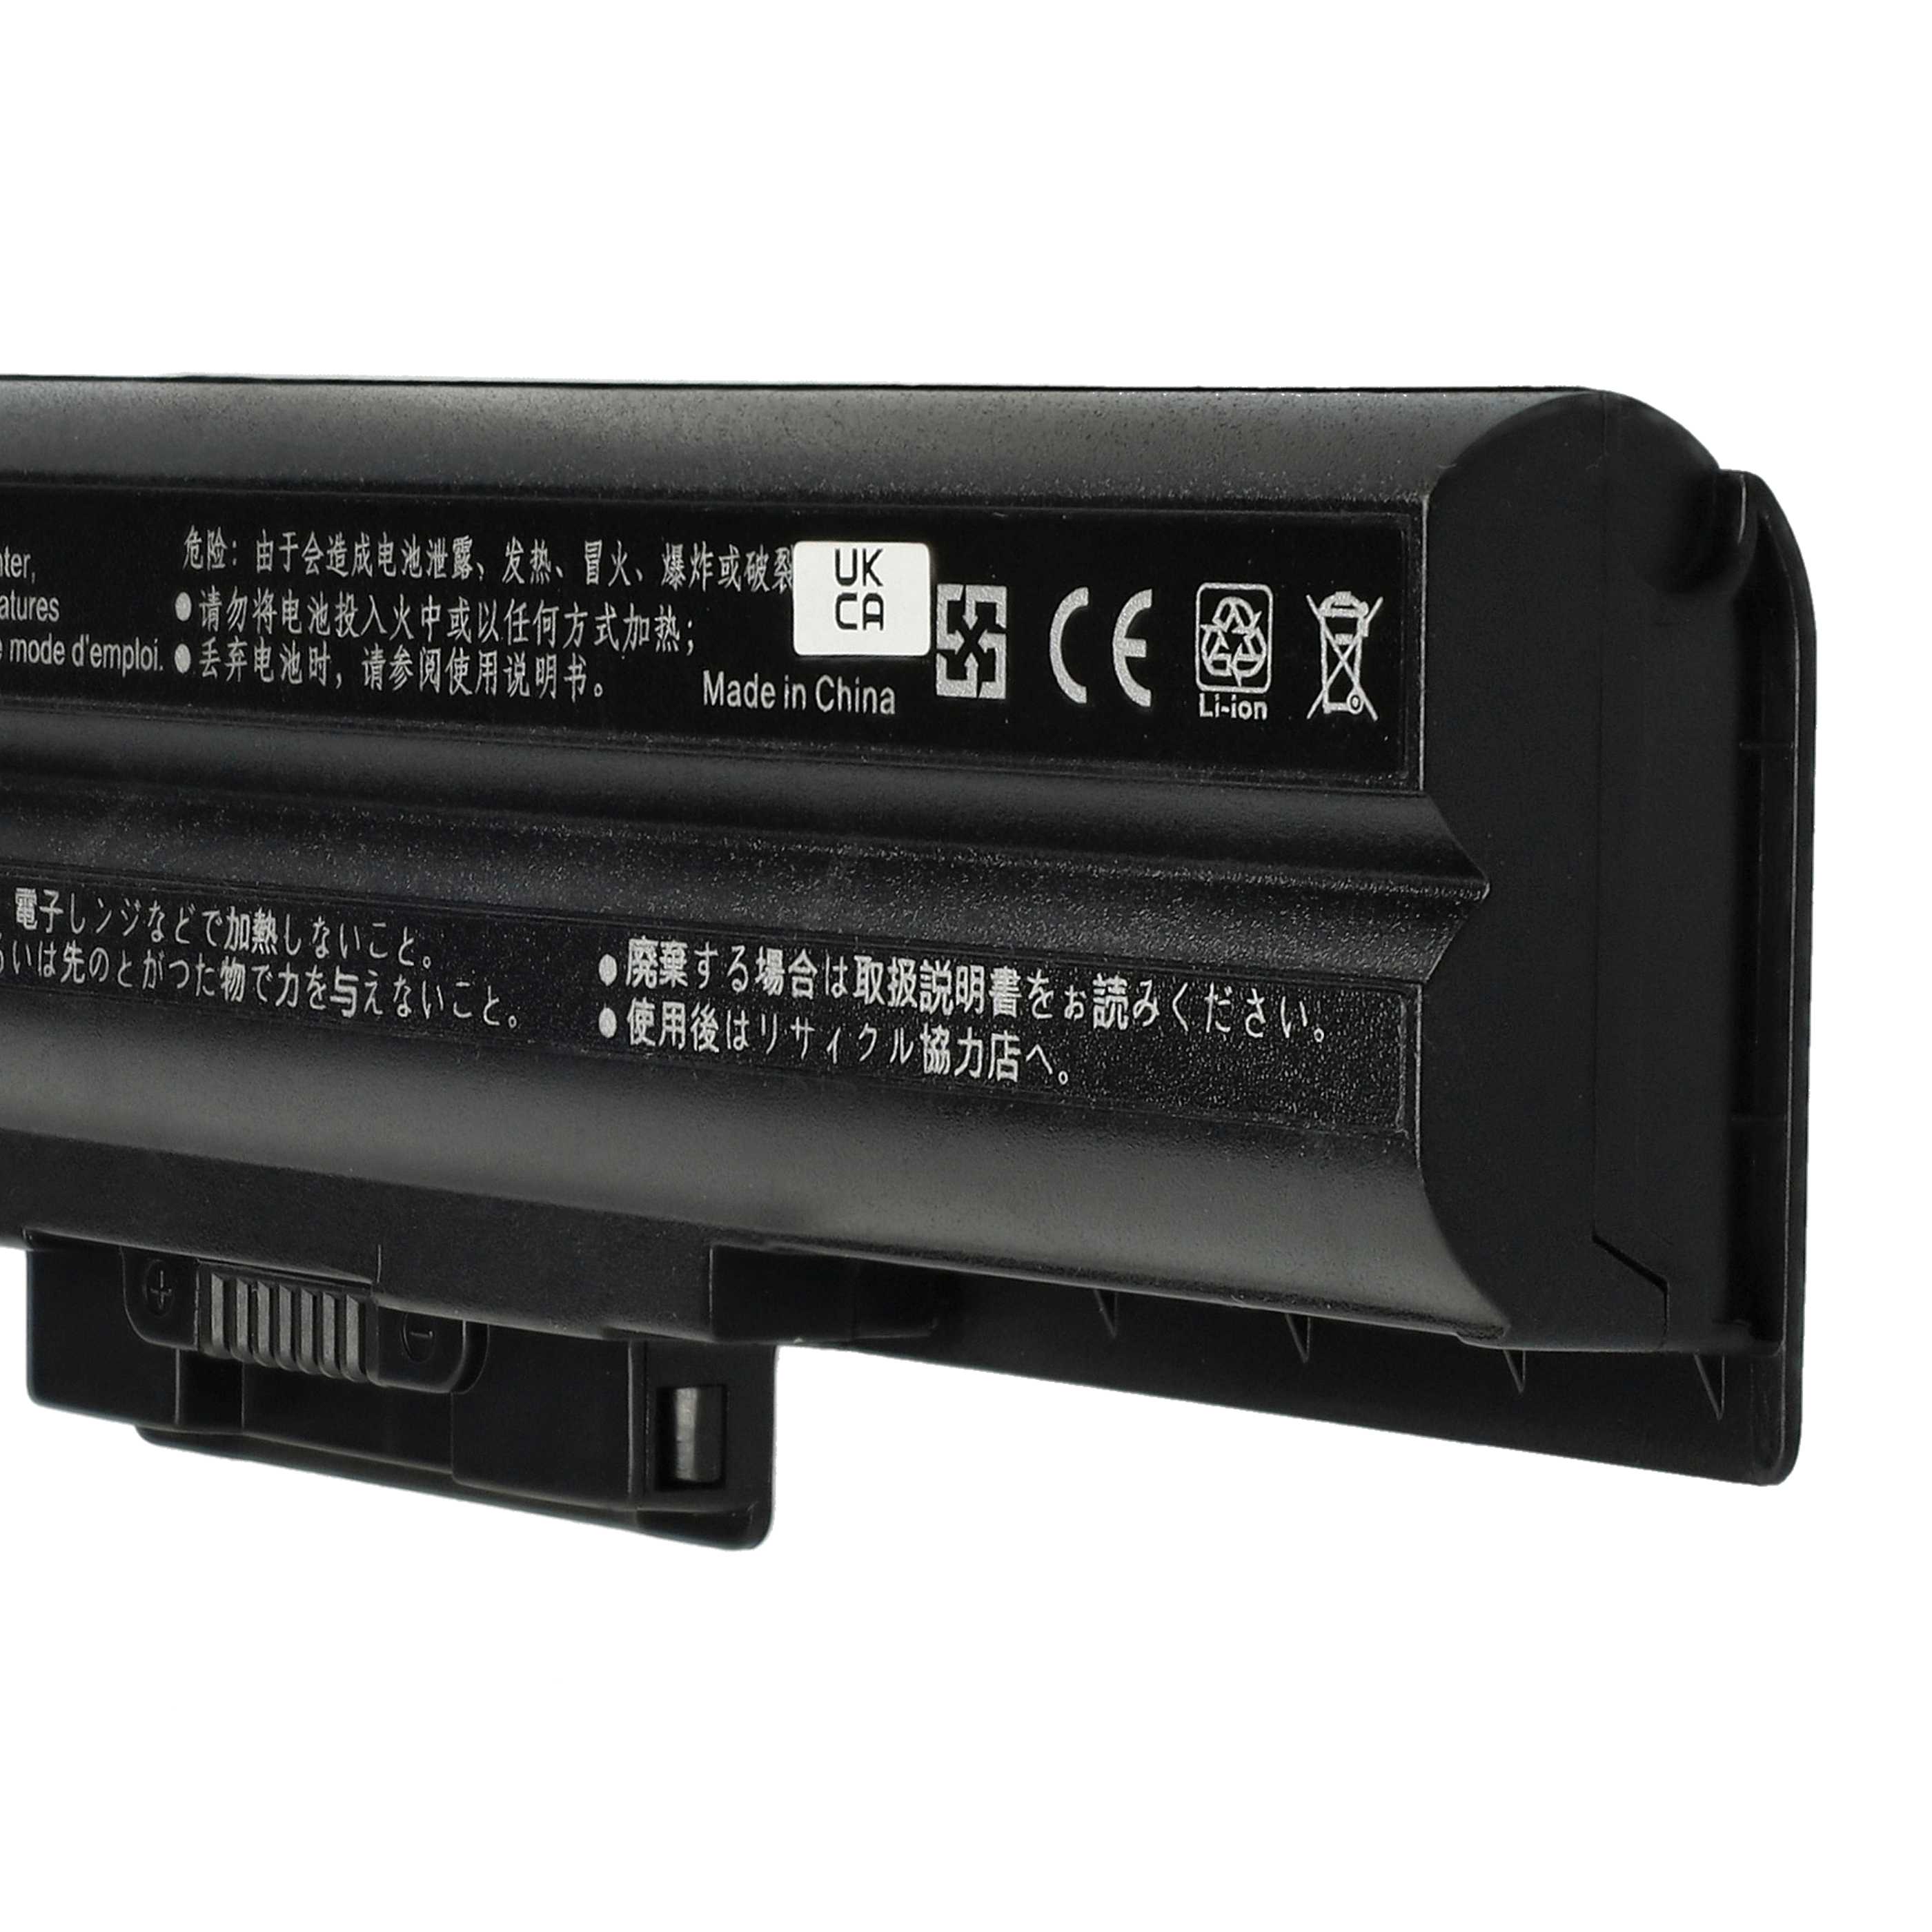 Notebook Battery Replacement for Sony VGP-BPS13, VGP-BPL21, VGP-BPL13 - 4400mAh 11.1V Li-Ion, black